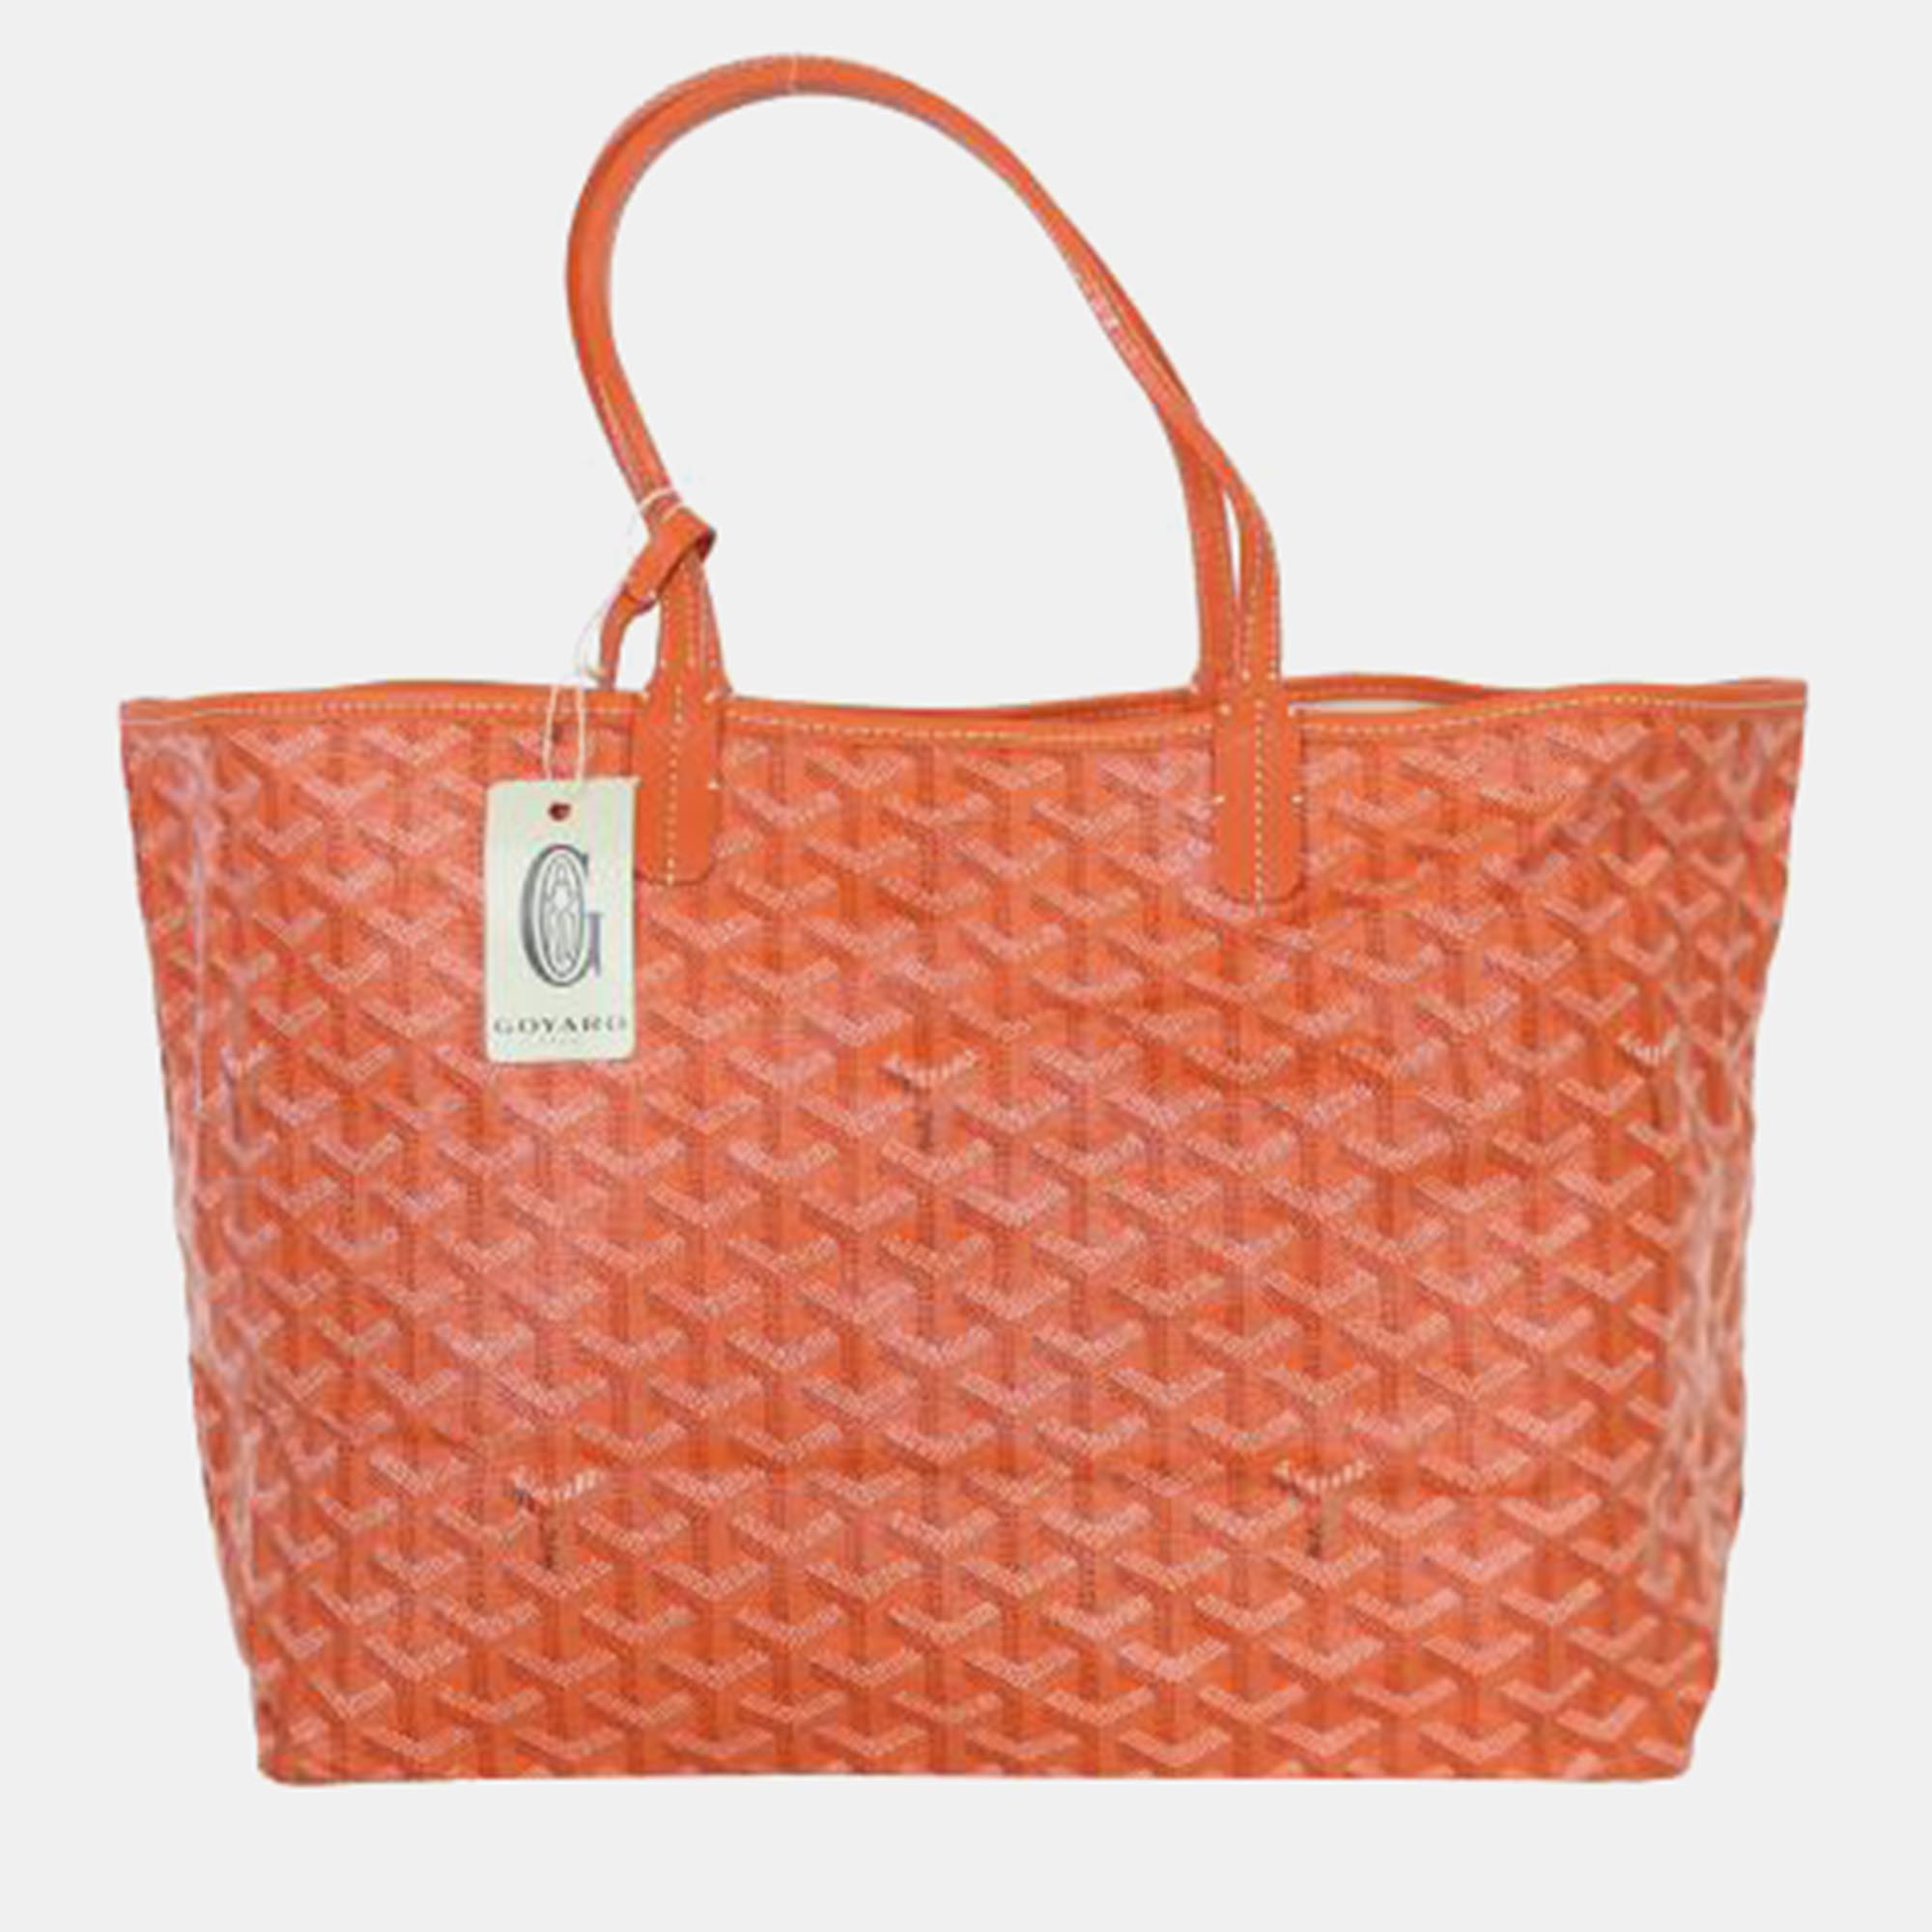 Pre-owned Goyard Orange St. Louis Pm Tote Bag